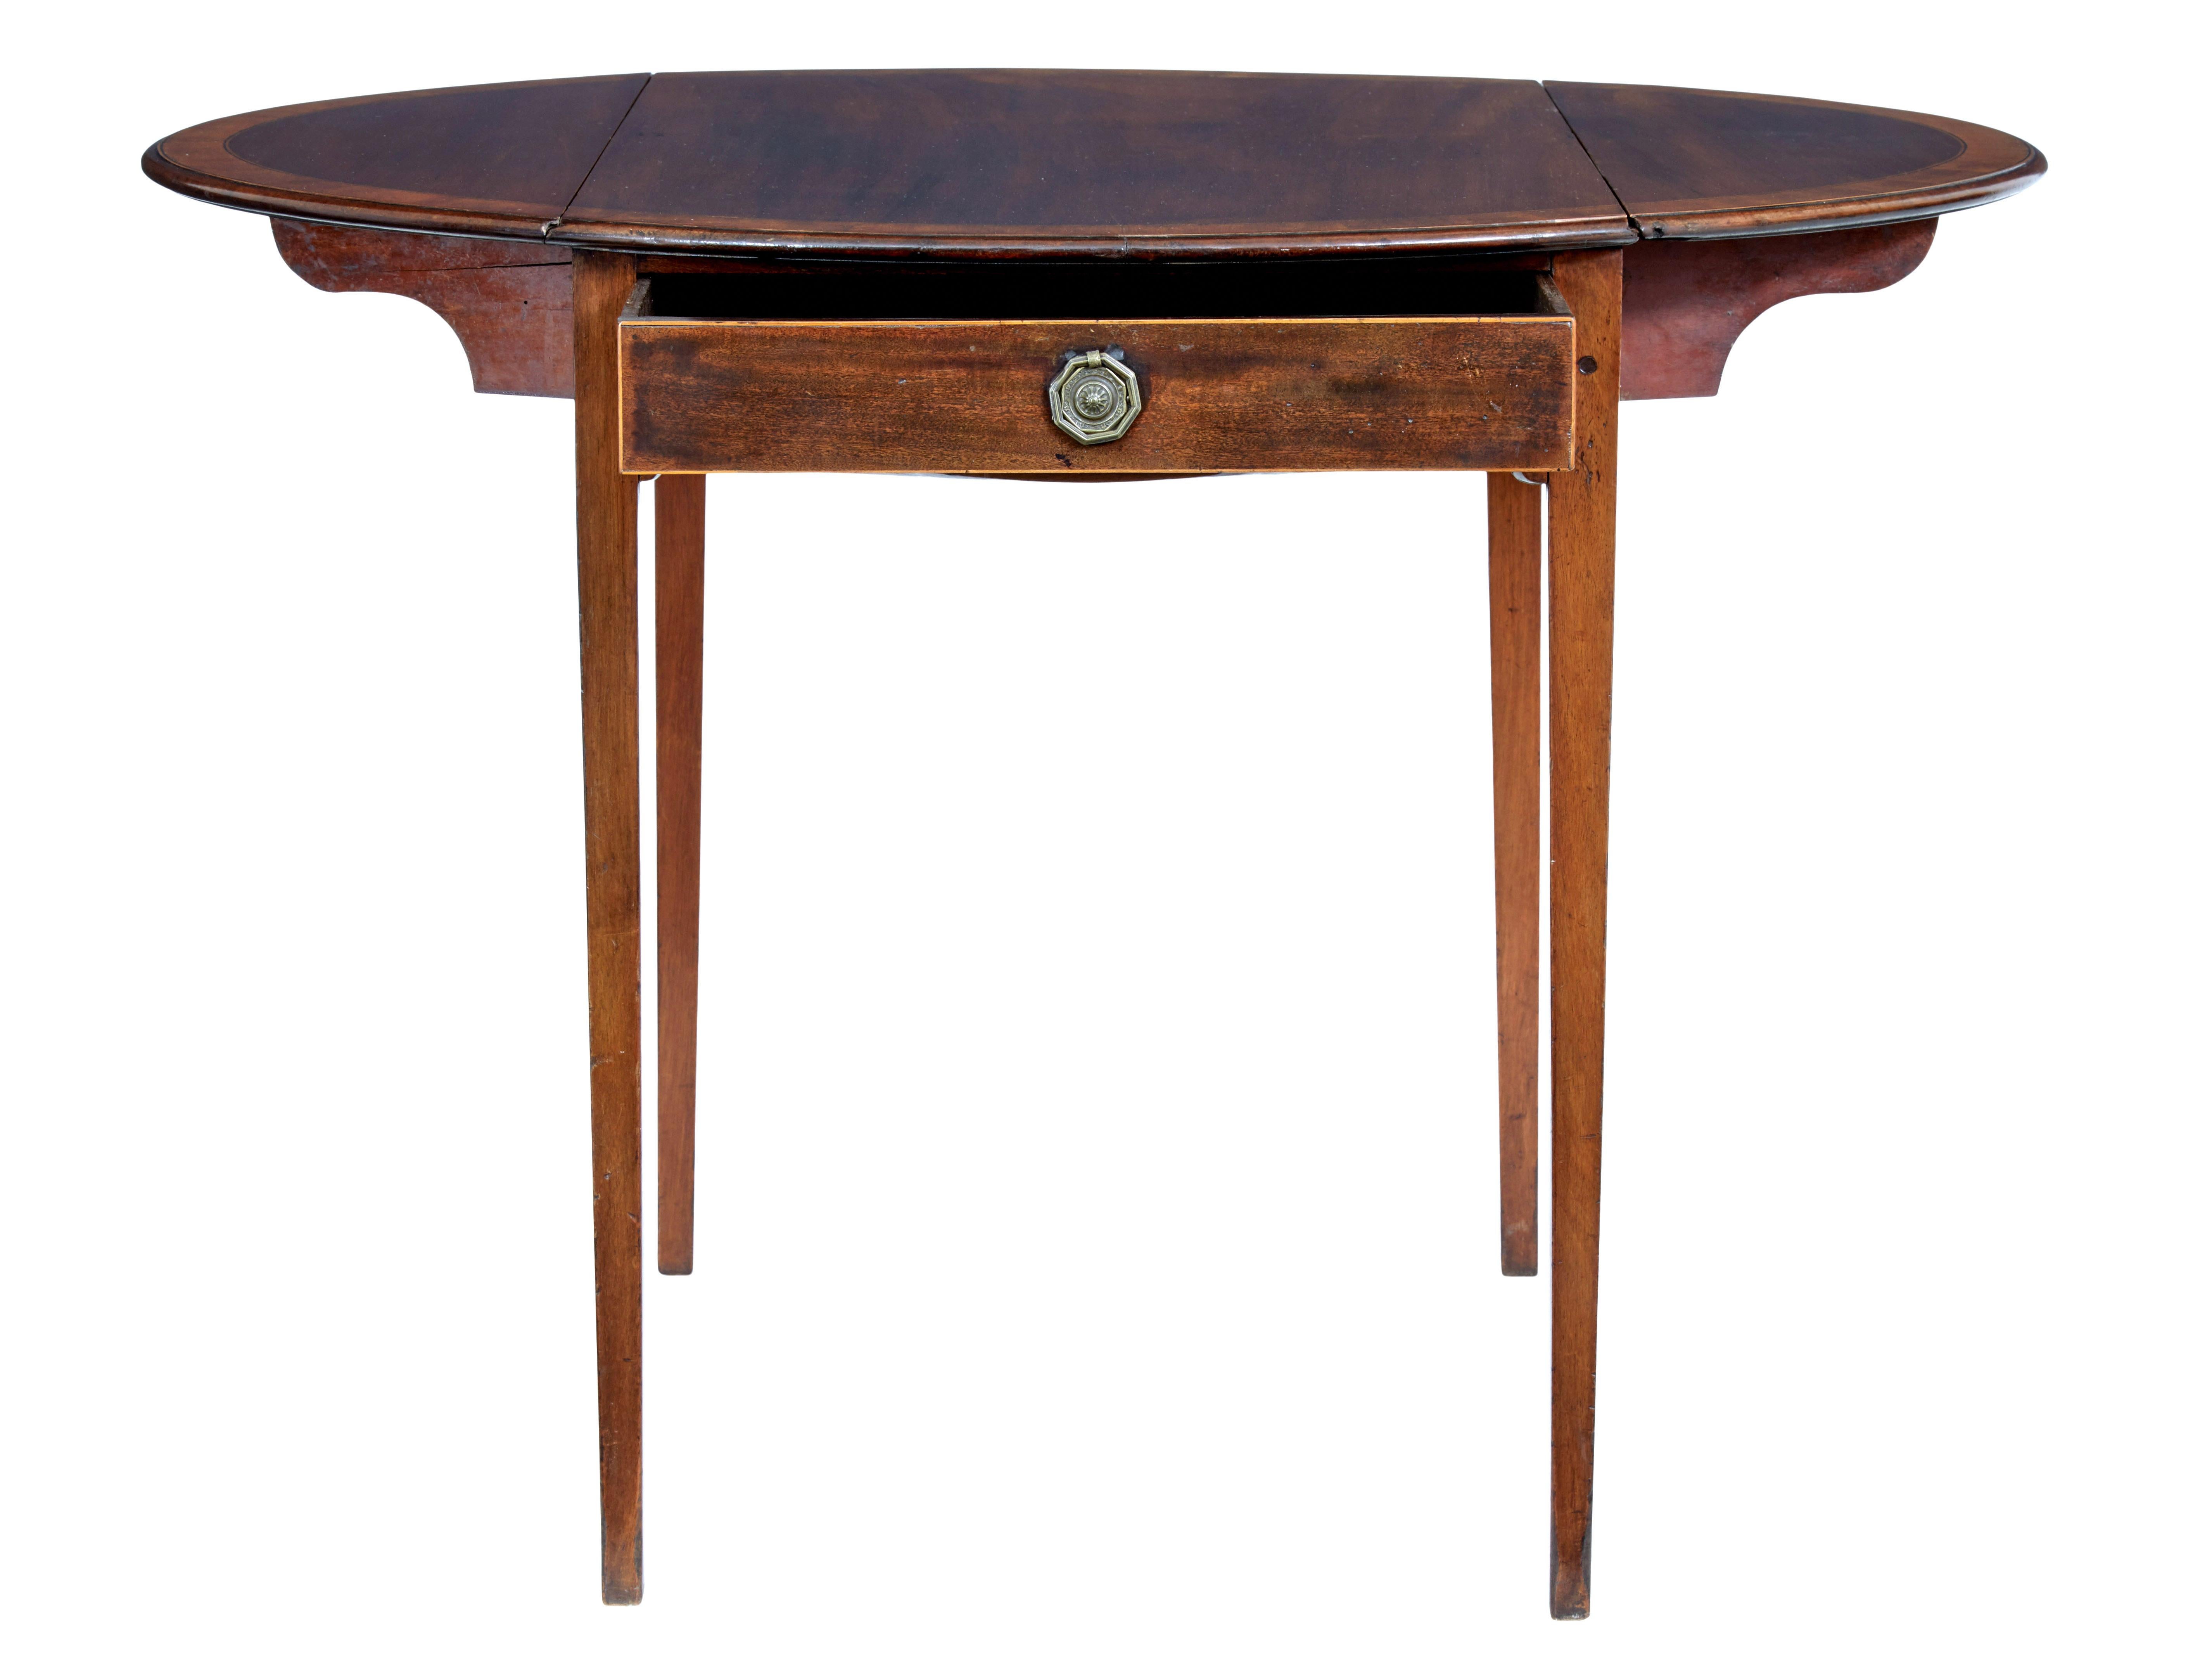 English 19th century late regency mahogany pembroke table For Sale